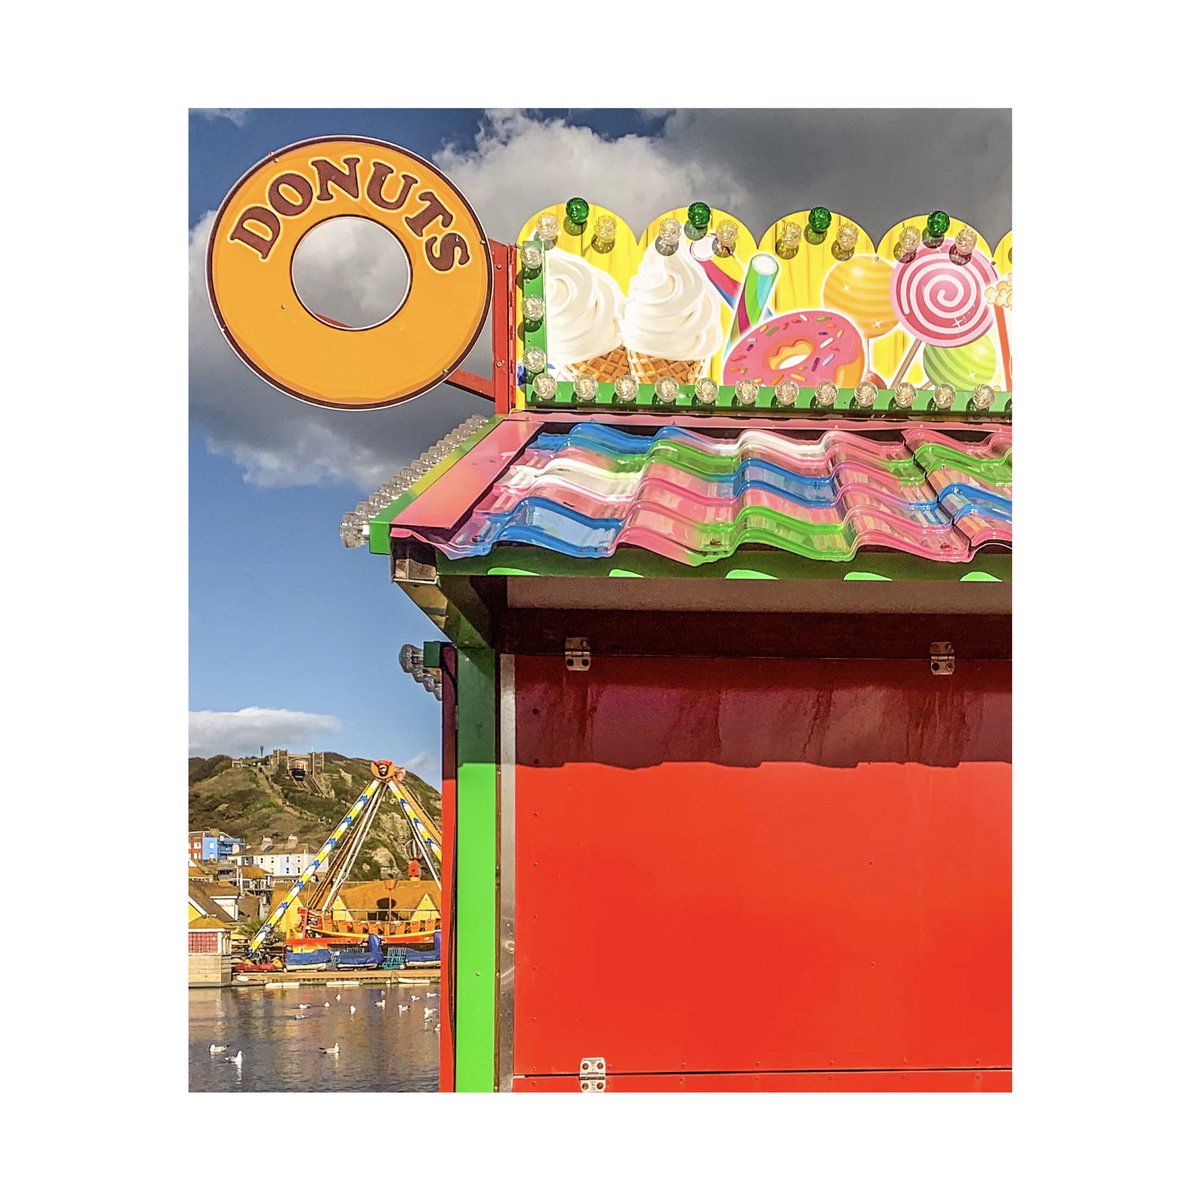 ‘All the fun of the ...You #Donut’  #fairground #fairgroundart #streetphotography #street #seaside #allthefunofthefair #colour #photo #abstract #mobilephotography #wheel #abstract #abstractphotography